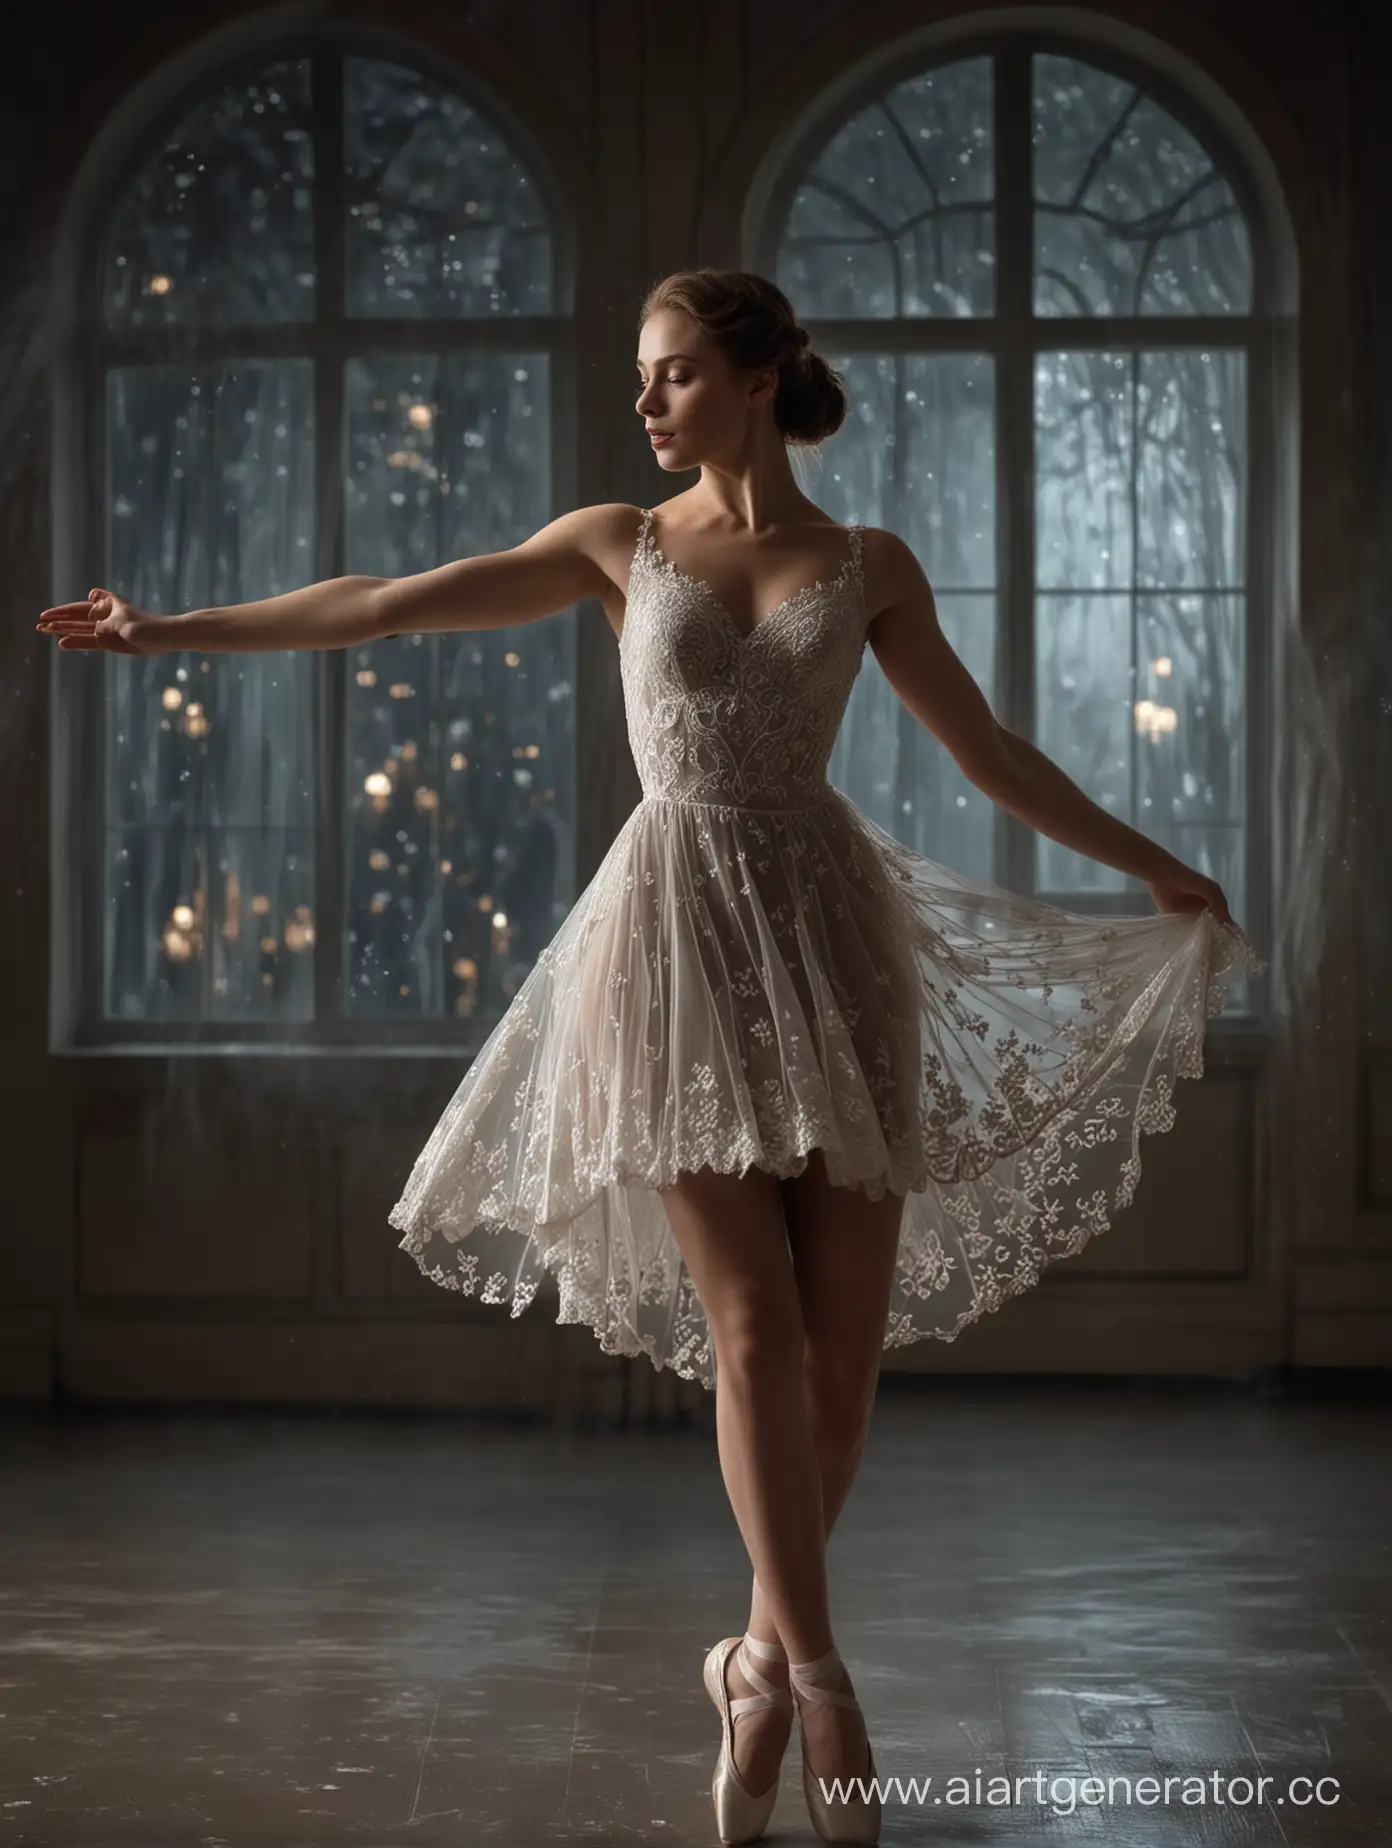 Elegant-Russian-Ballet-Dancer-in-Moonlit-Lace-Dress